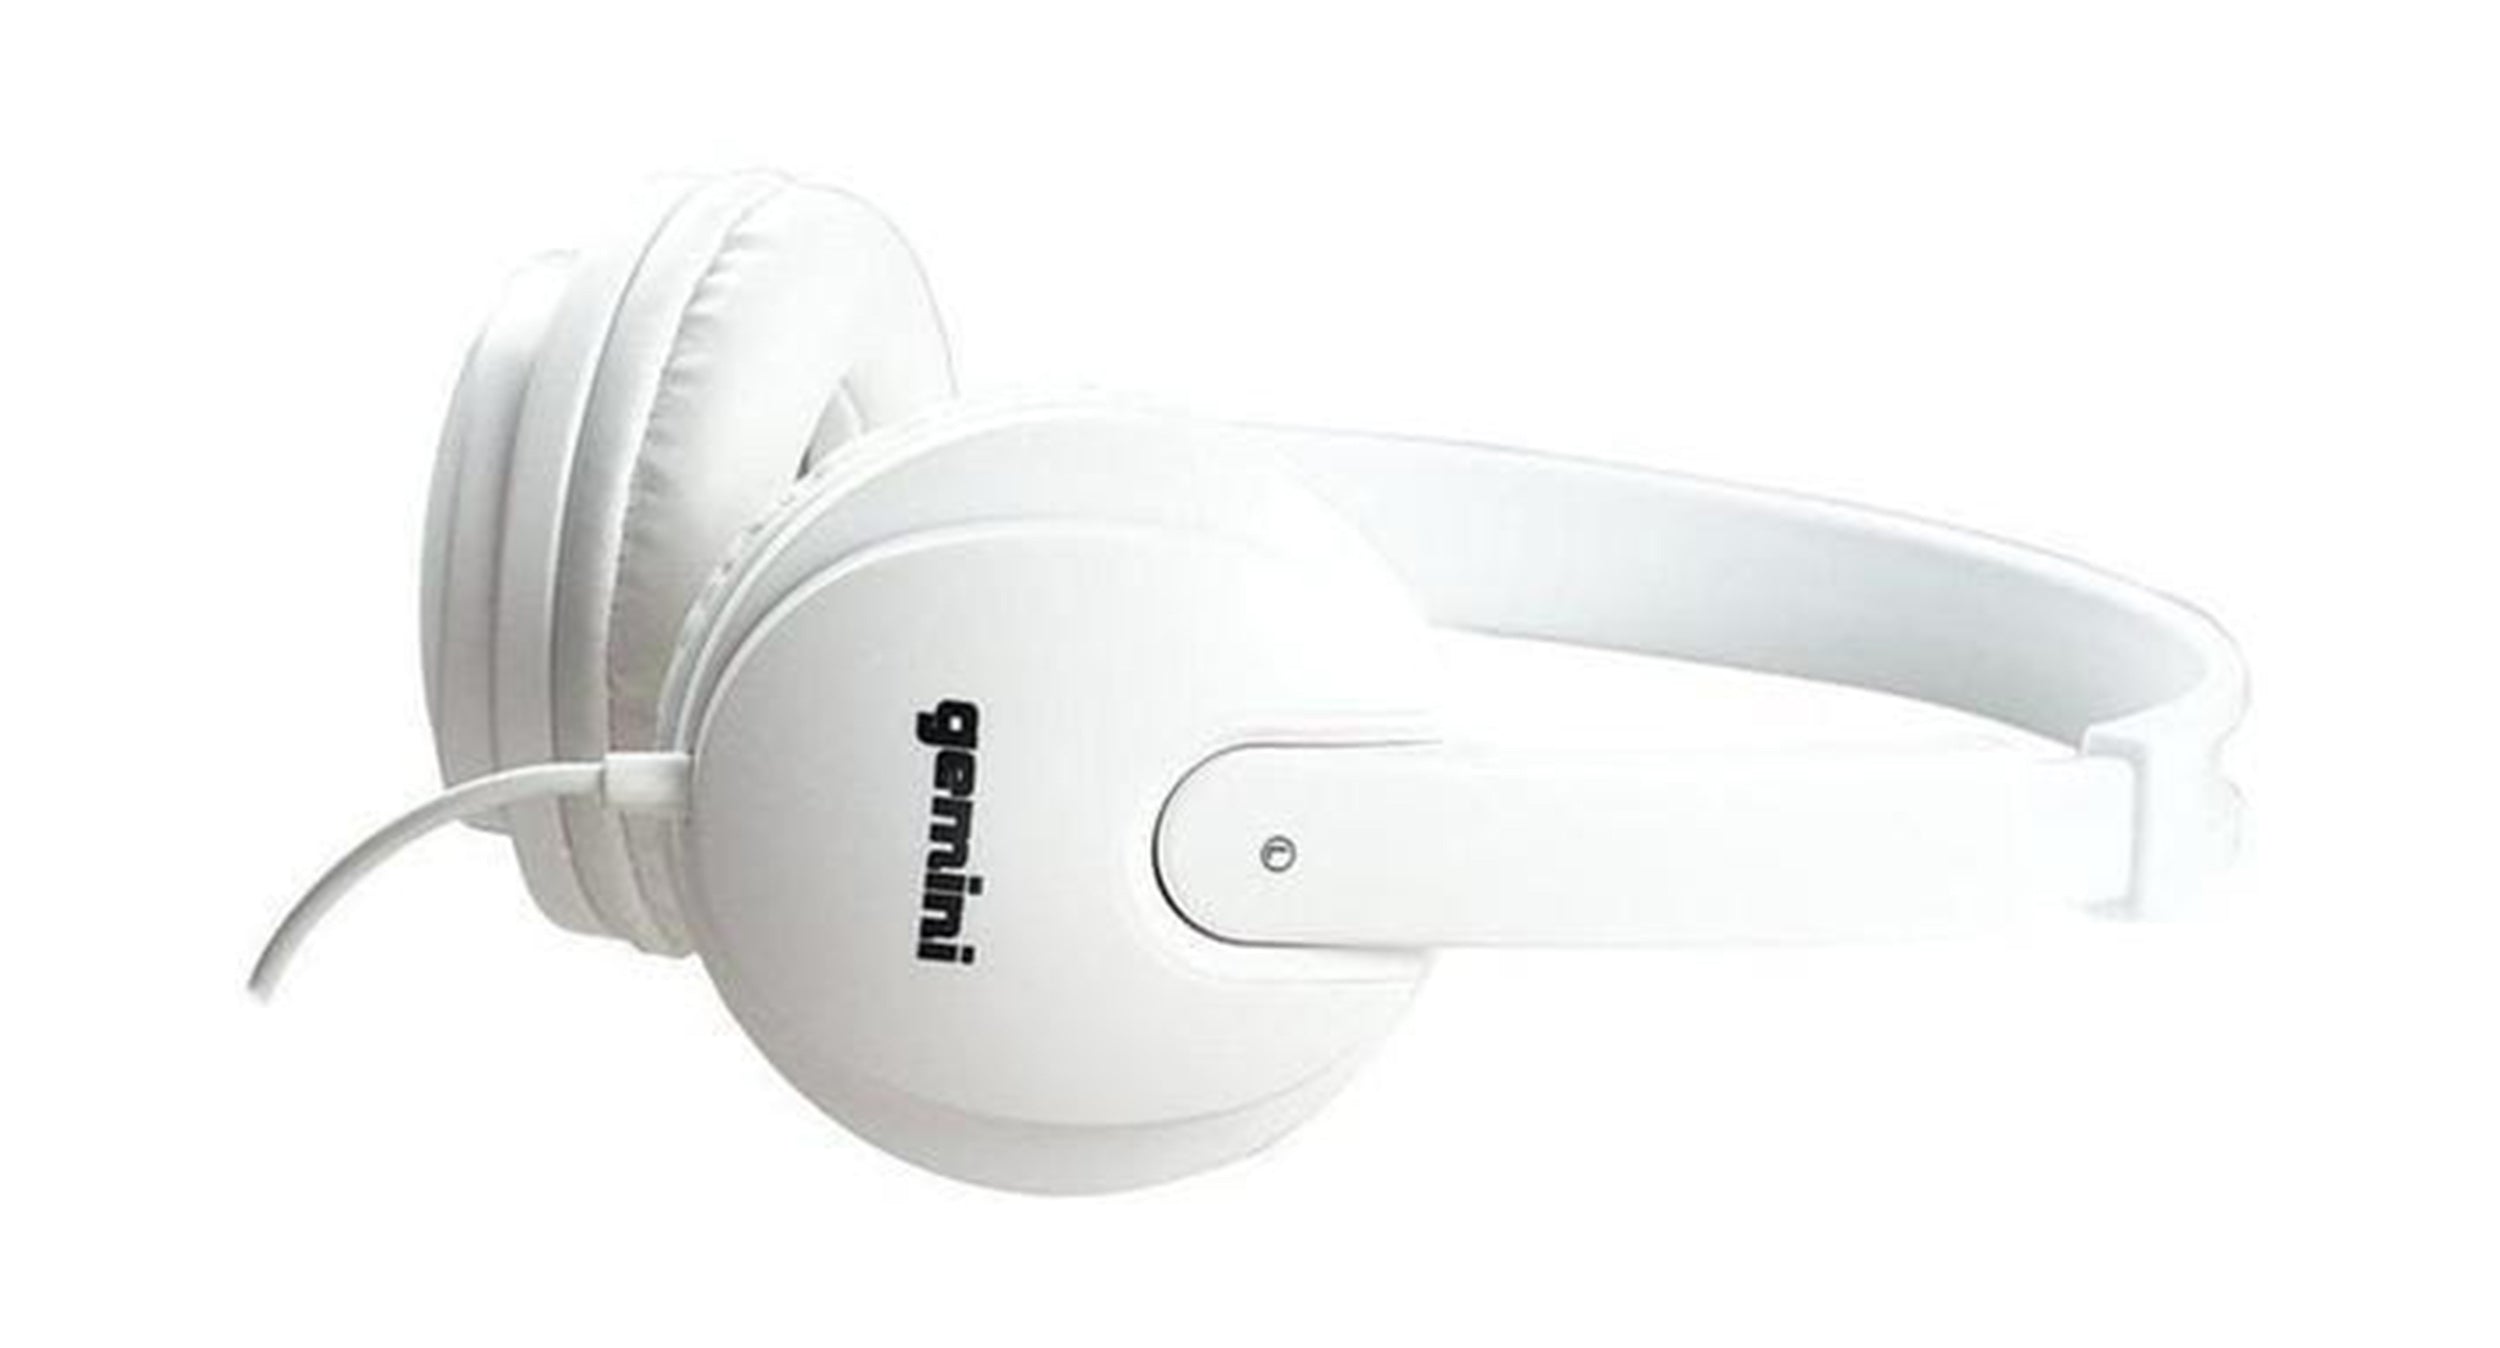 Gemini Sound DJX-200 (WHT) Professional DJ Headphones - White - Hollywood DJ